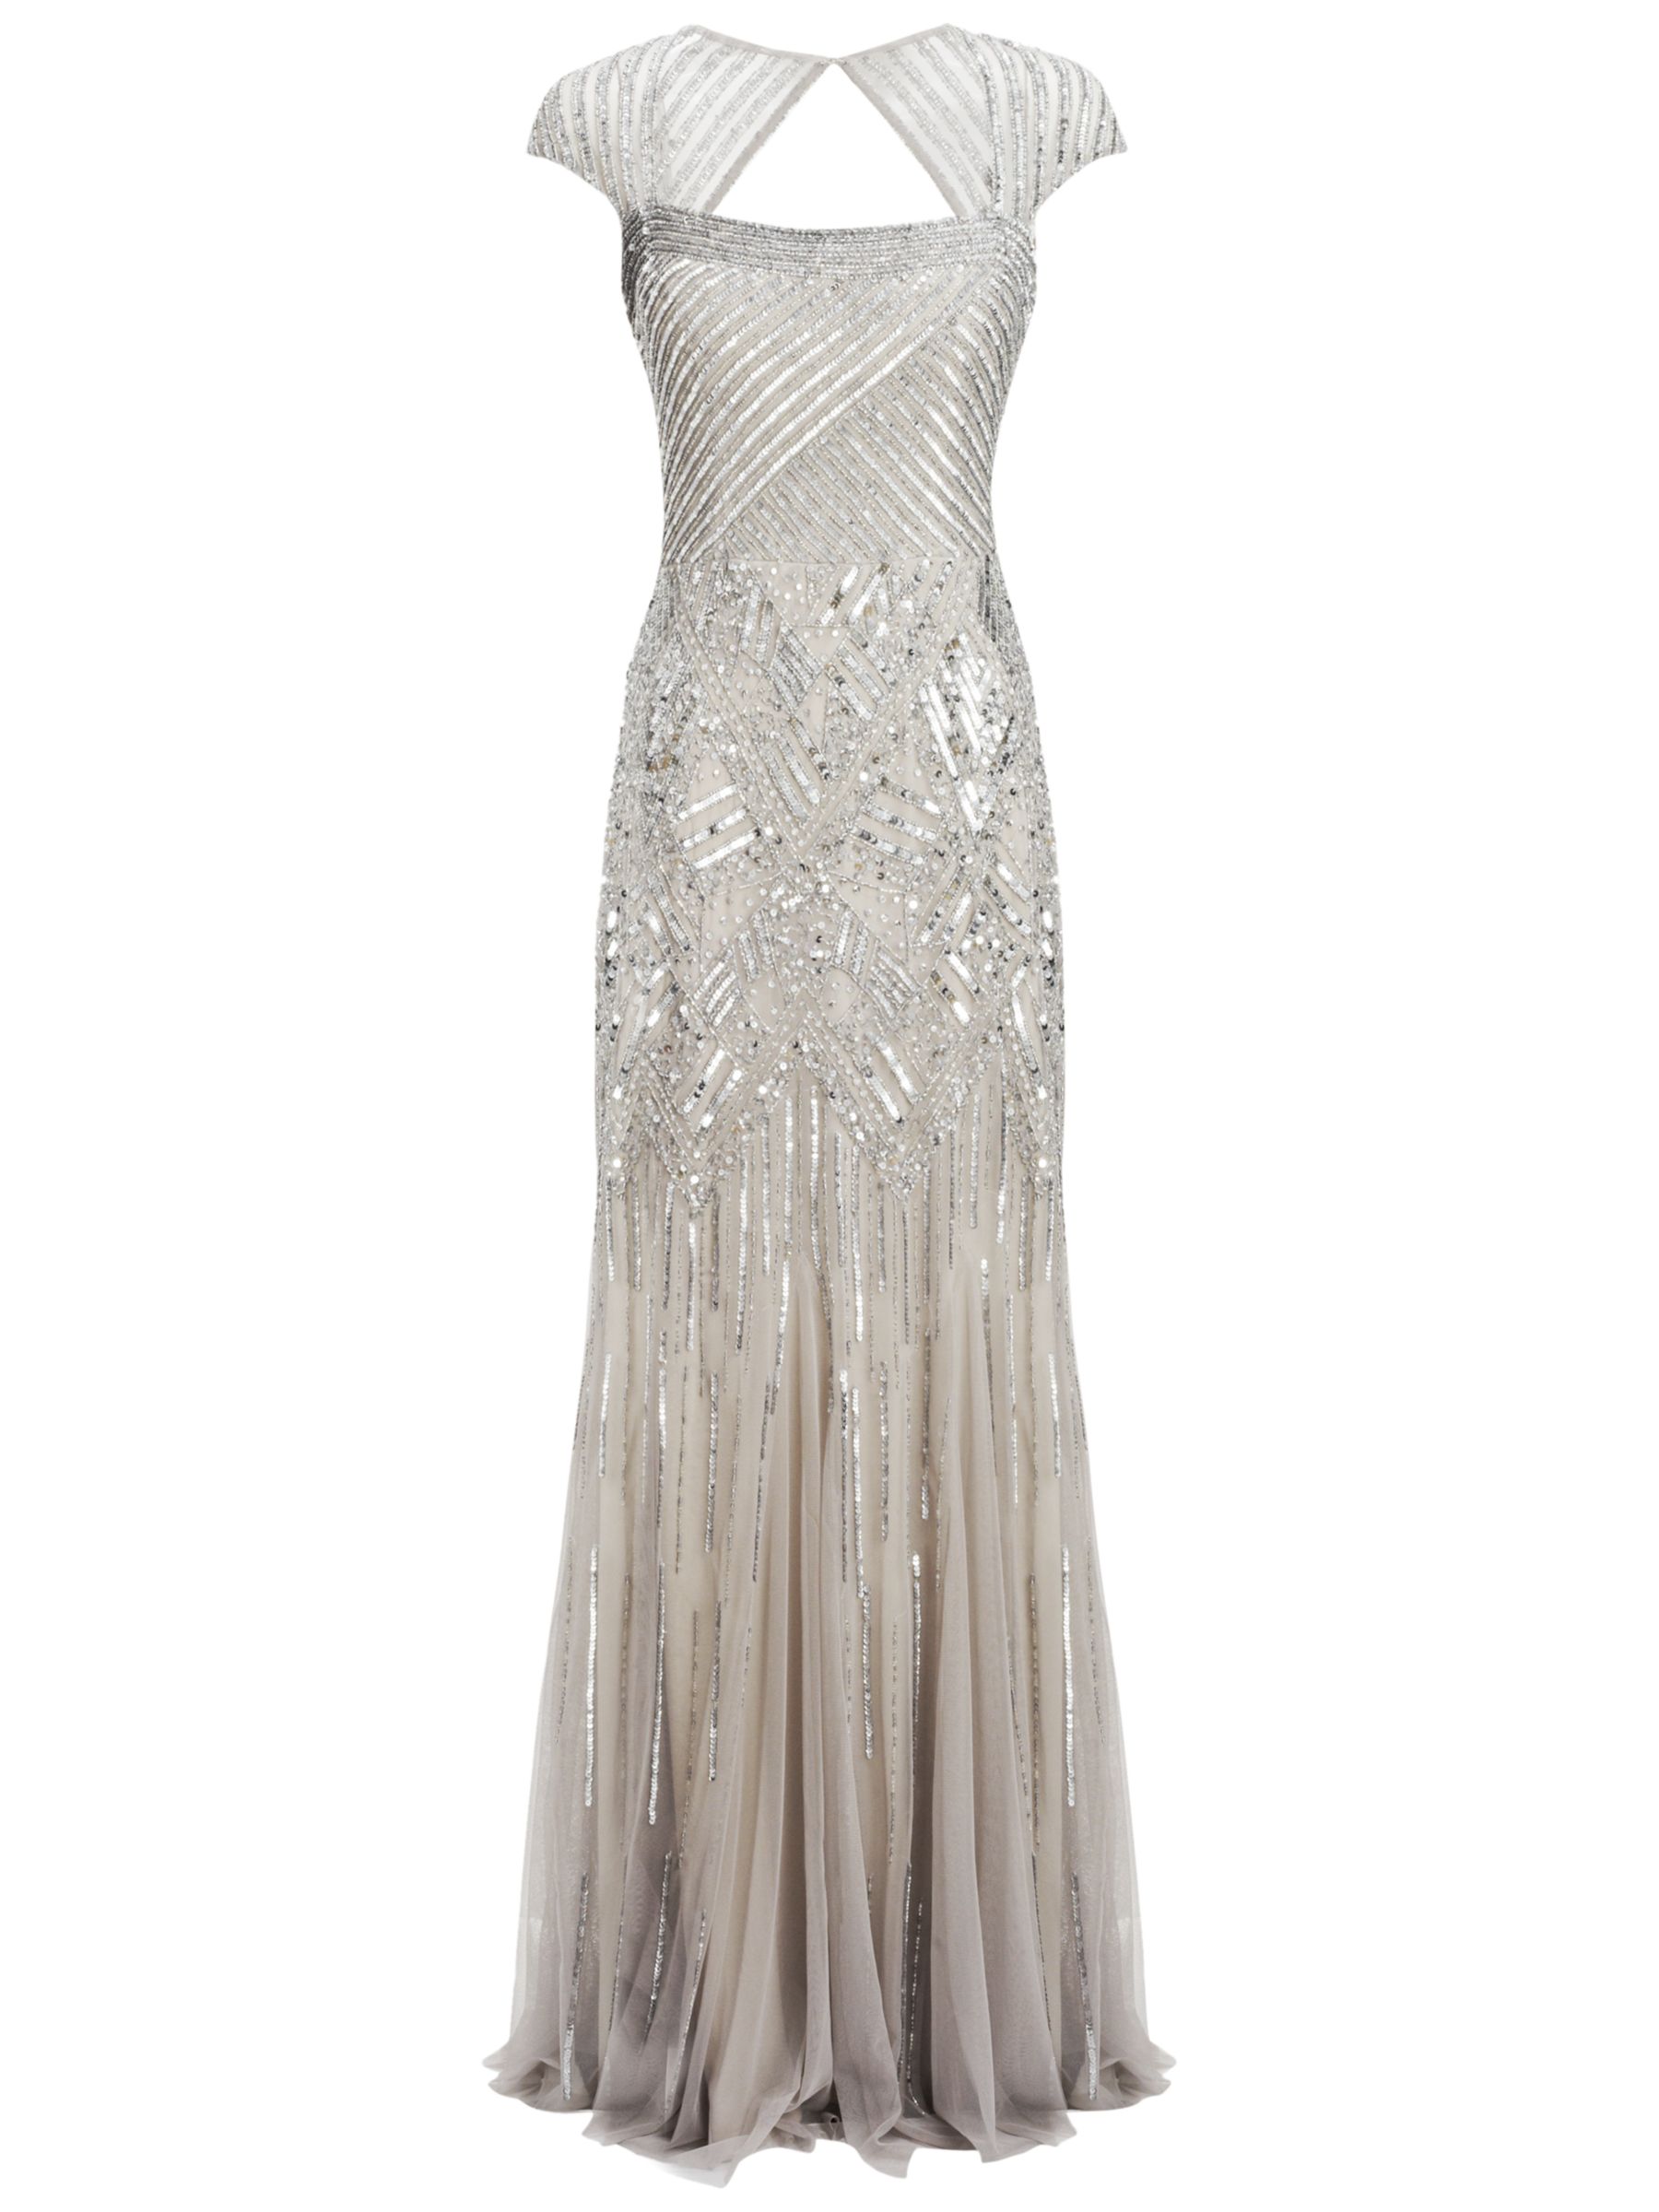 Adrianna Papell Long Beaded Dress, Platinum